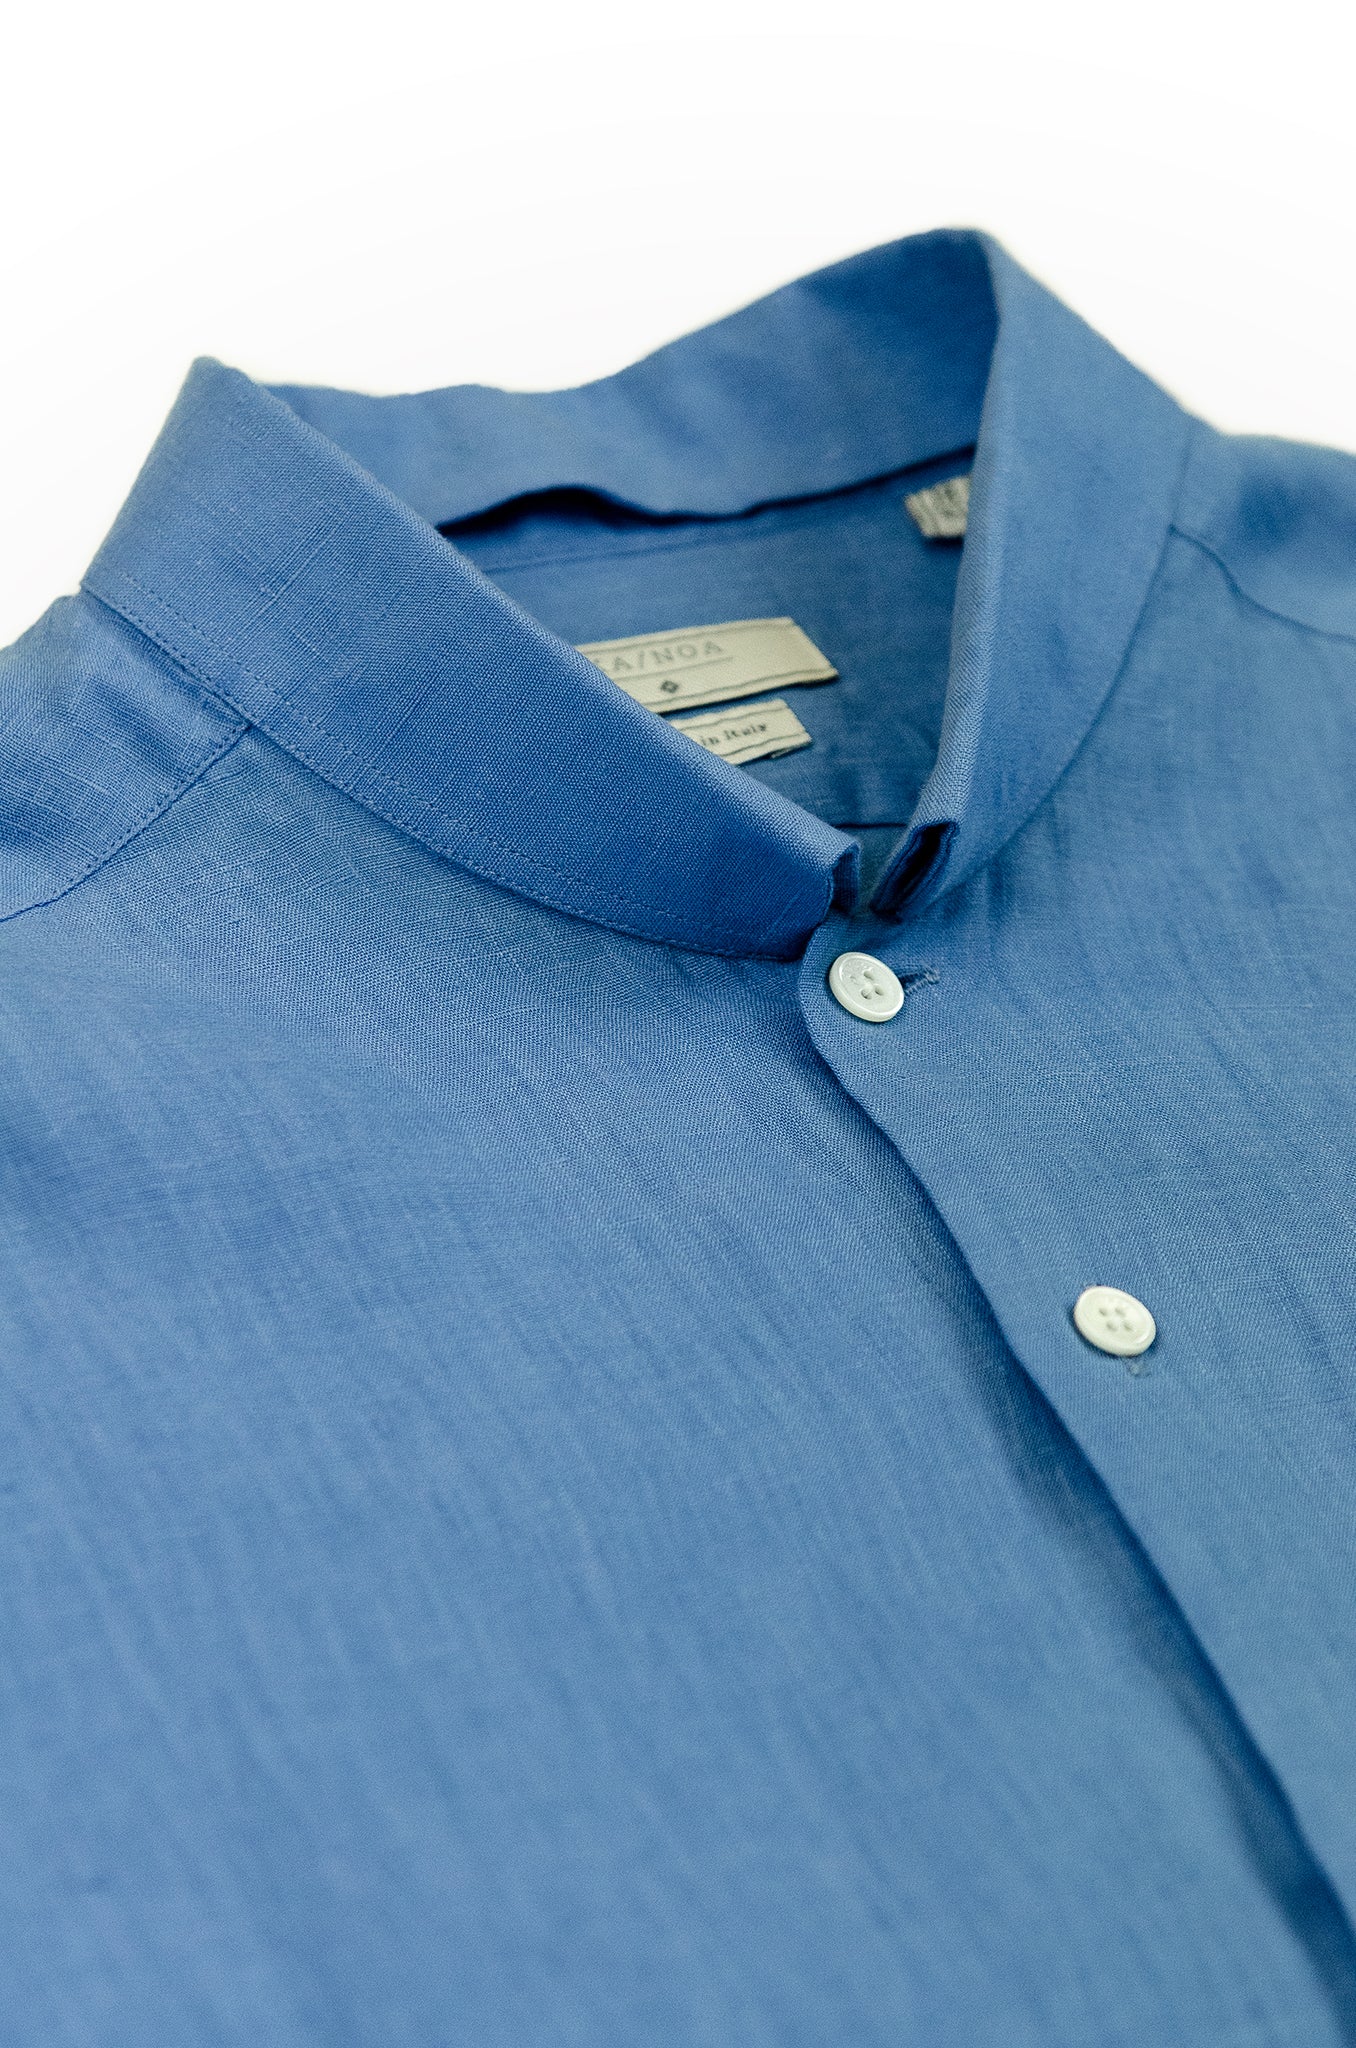 Conrad golden linen shirt (river blue)